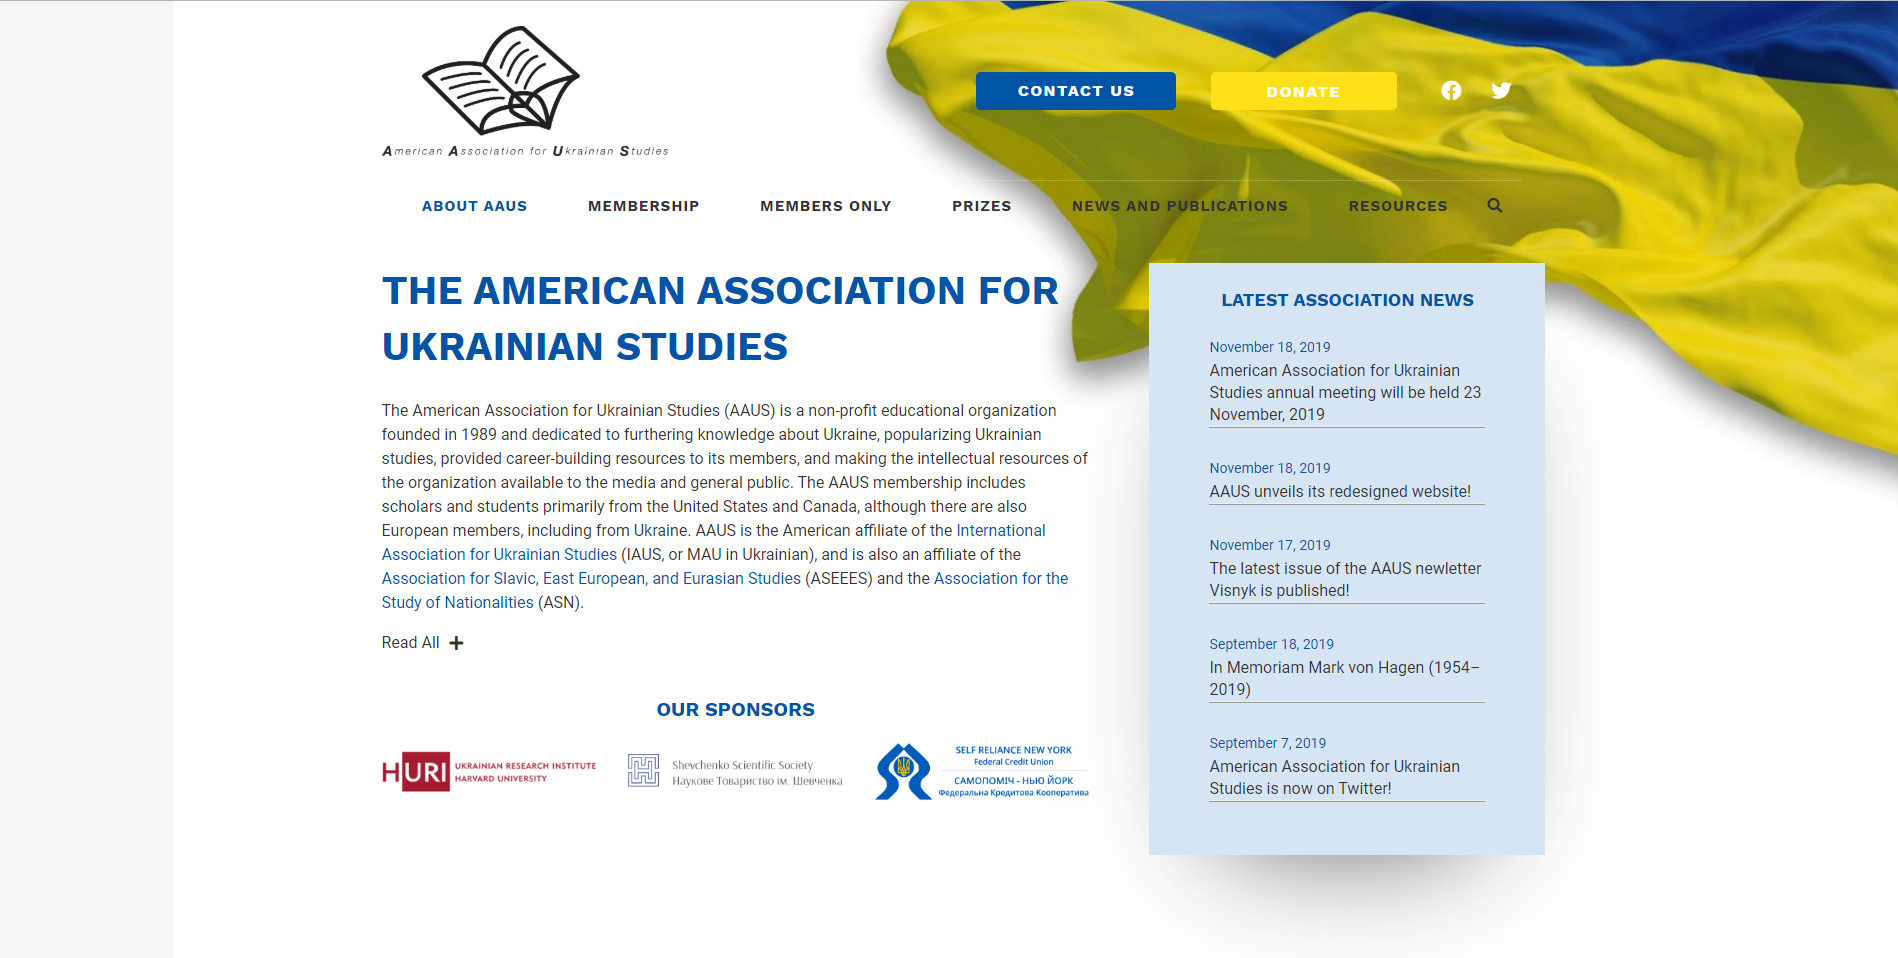 The American Association for Ukrainian Studies (AAUS)